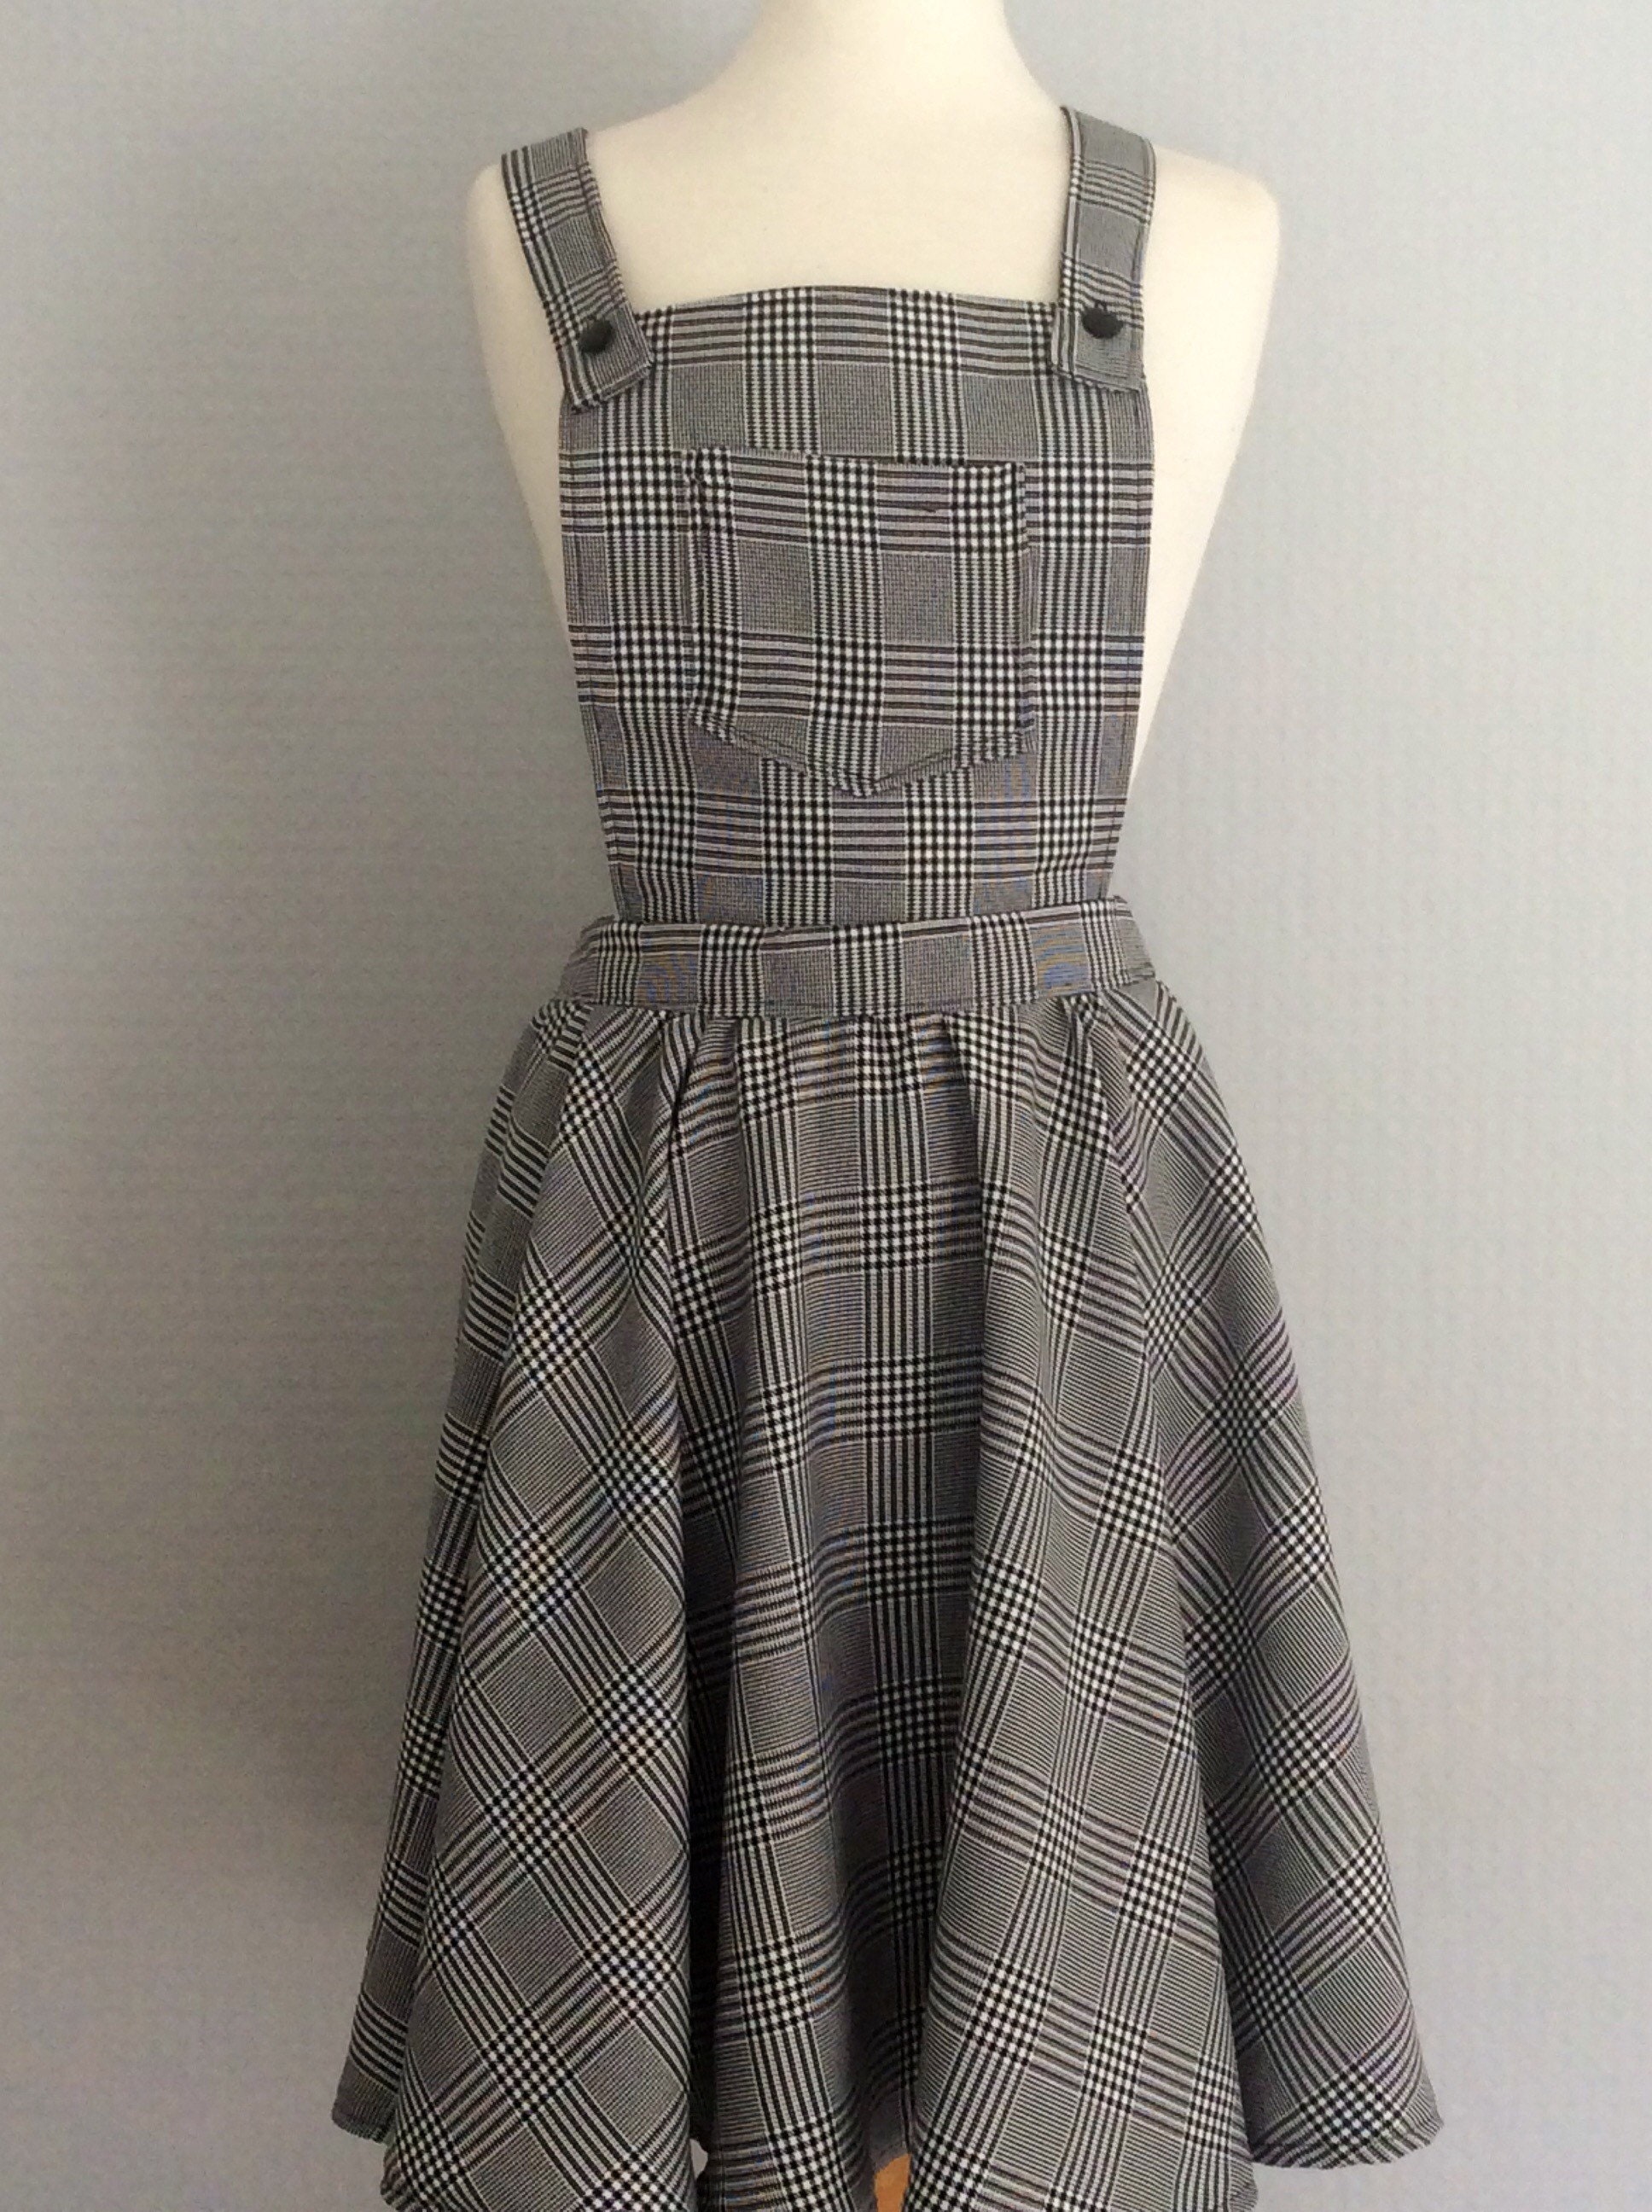 Black & white tartan check dungaree pinafore dress | Etsy